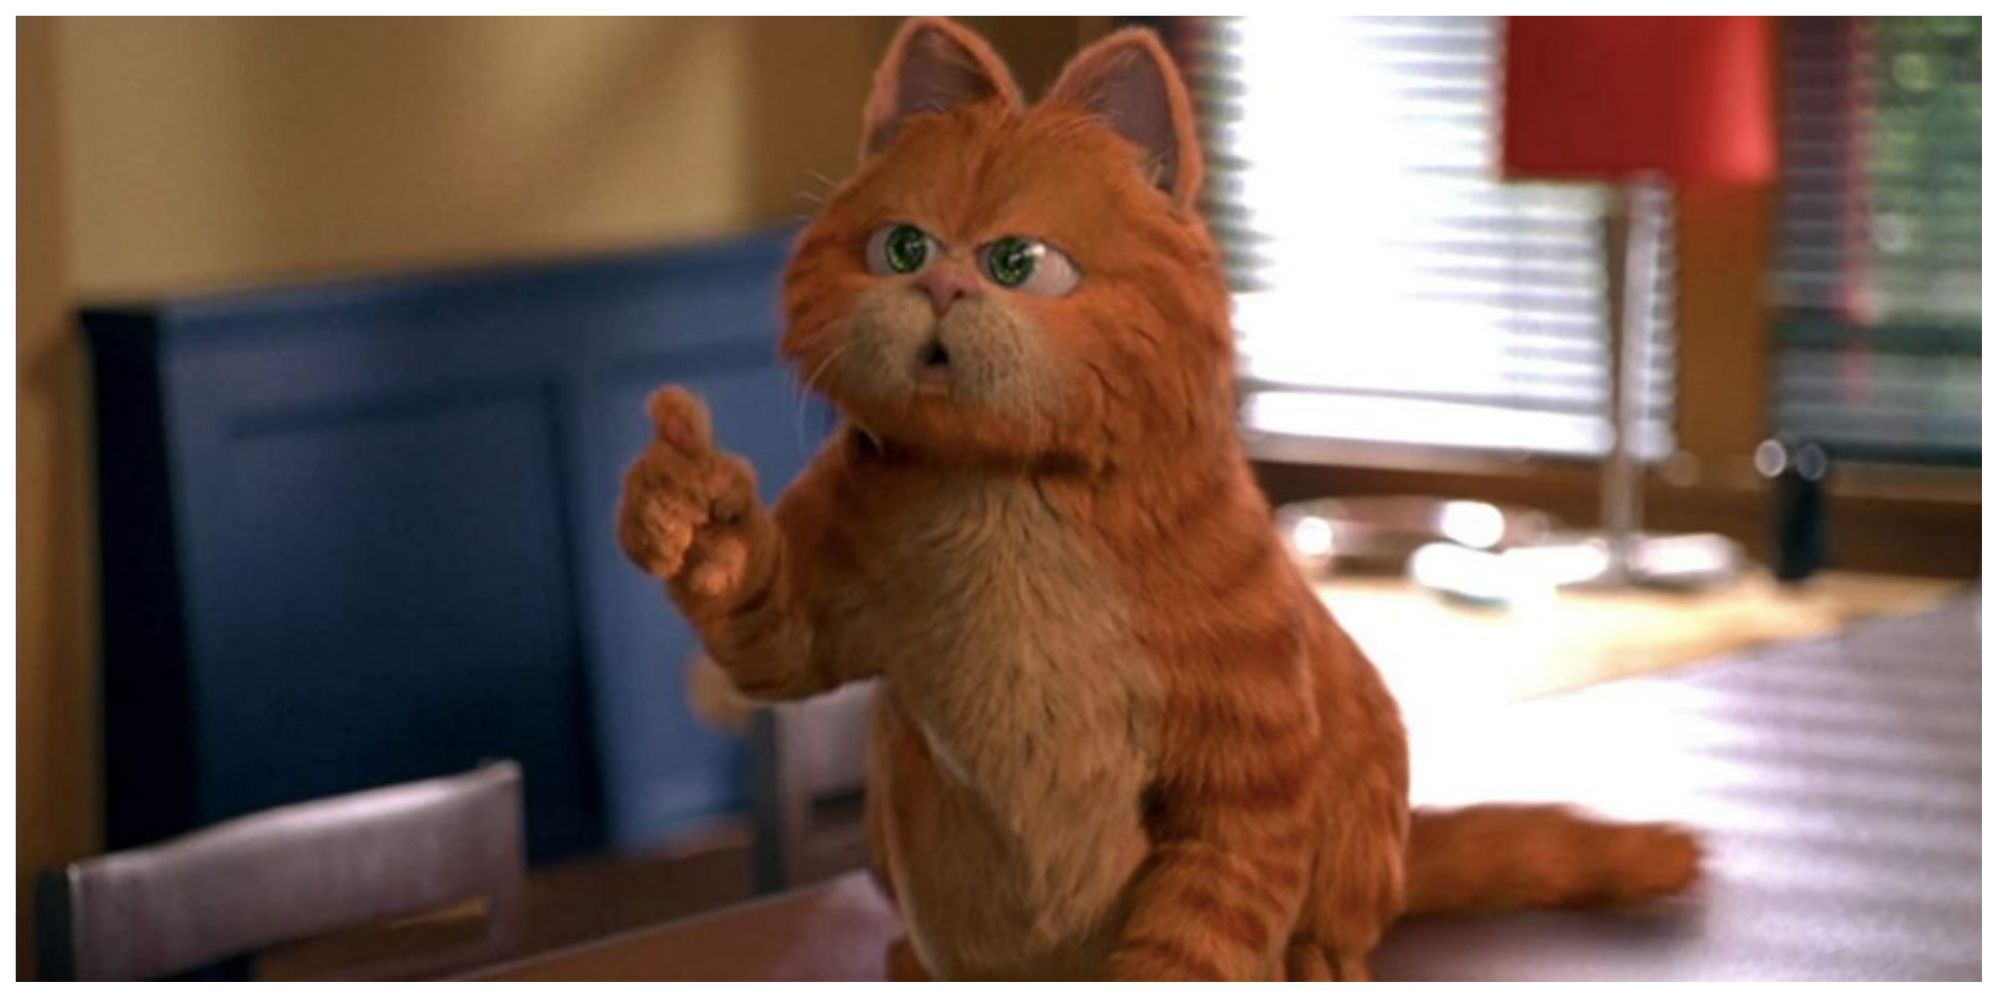 Garfield in Garfield (2004).